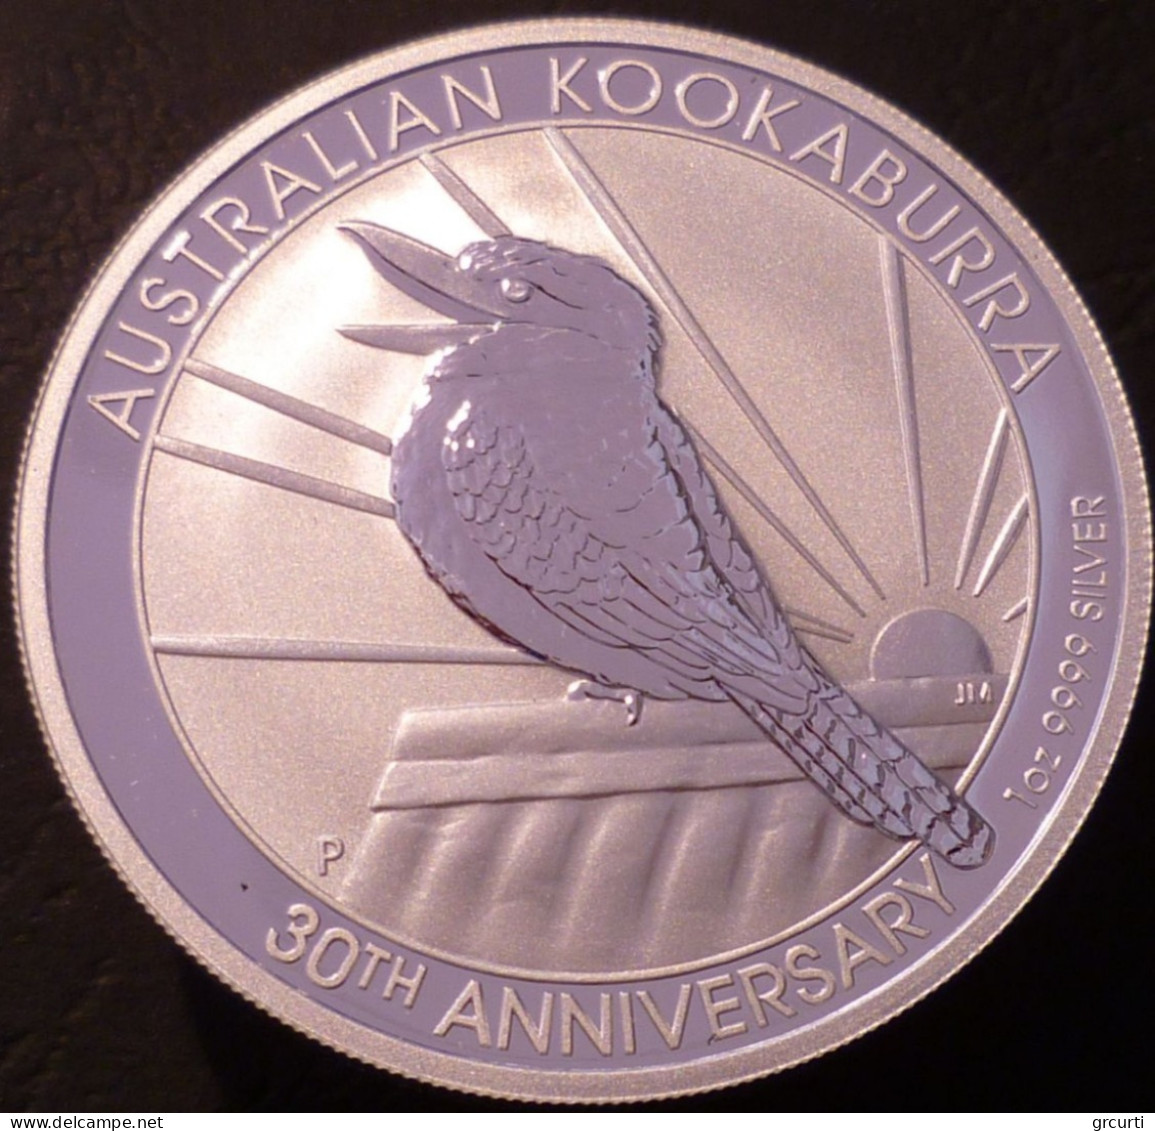 Australia - 1 Dollar 2020 - Kookaburra - UC# 460 - Silver Bullions